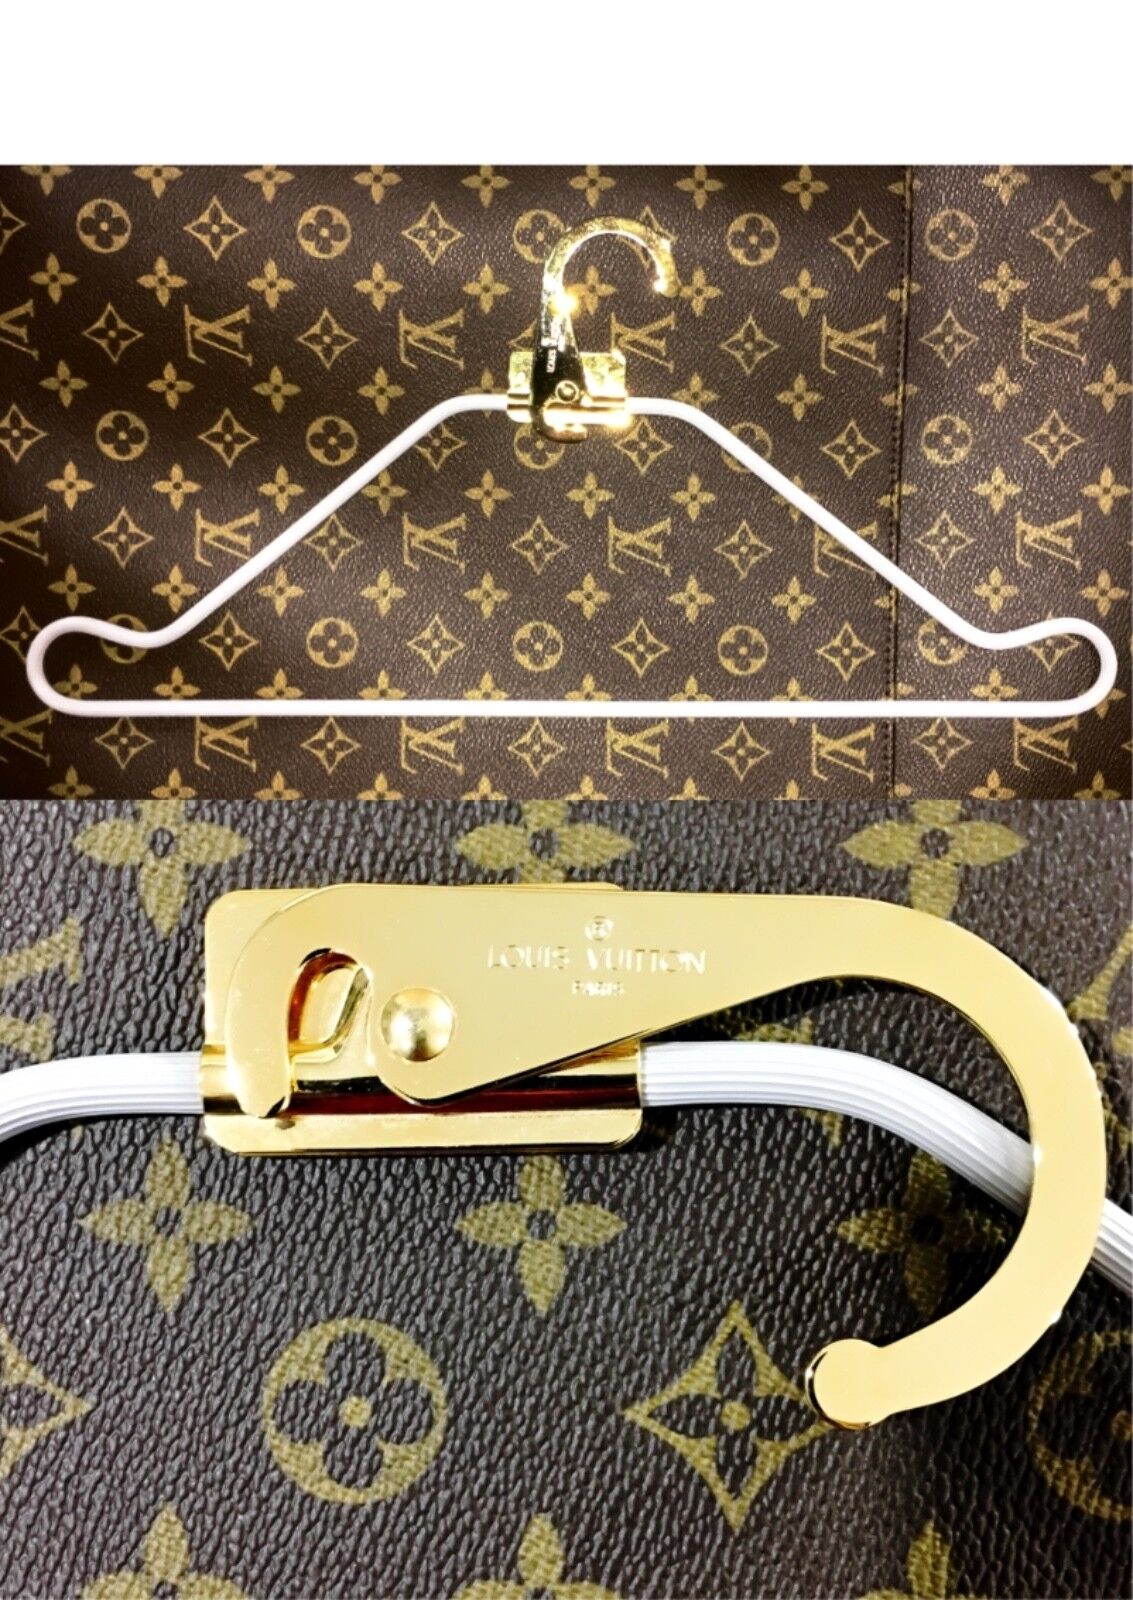 Louis Vuitton Garment Bag For Pegase Dark Brown AUTHENTIC w/ Hanger